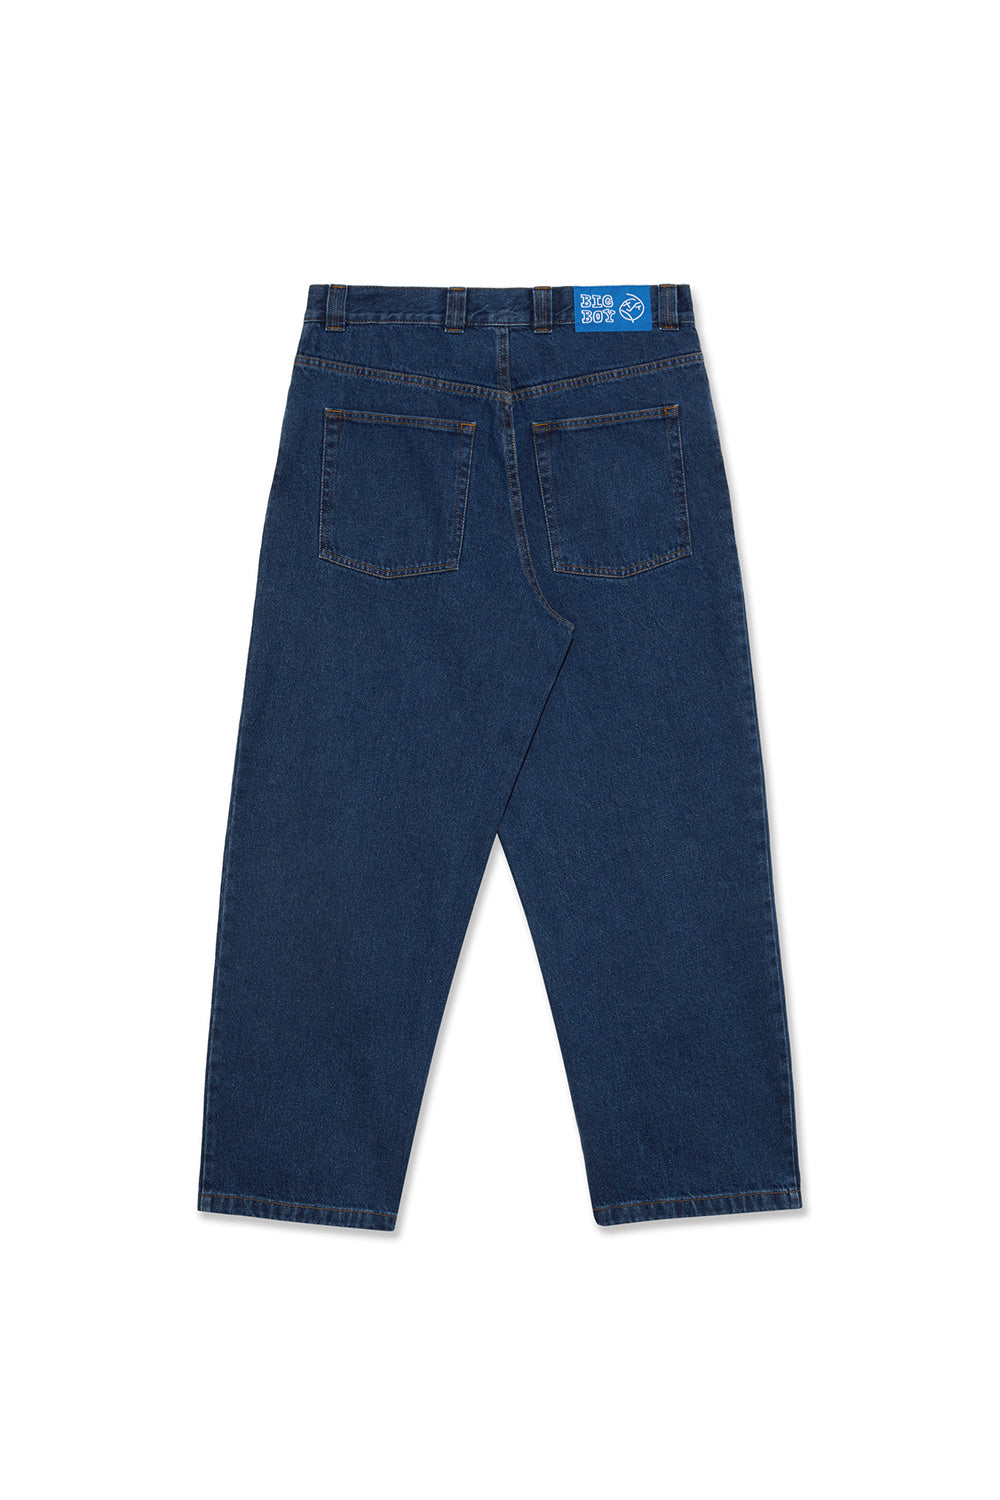 Polar Skate Co. Big Boy Jeans Dark Blue - BONKERS